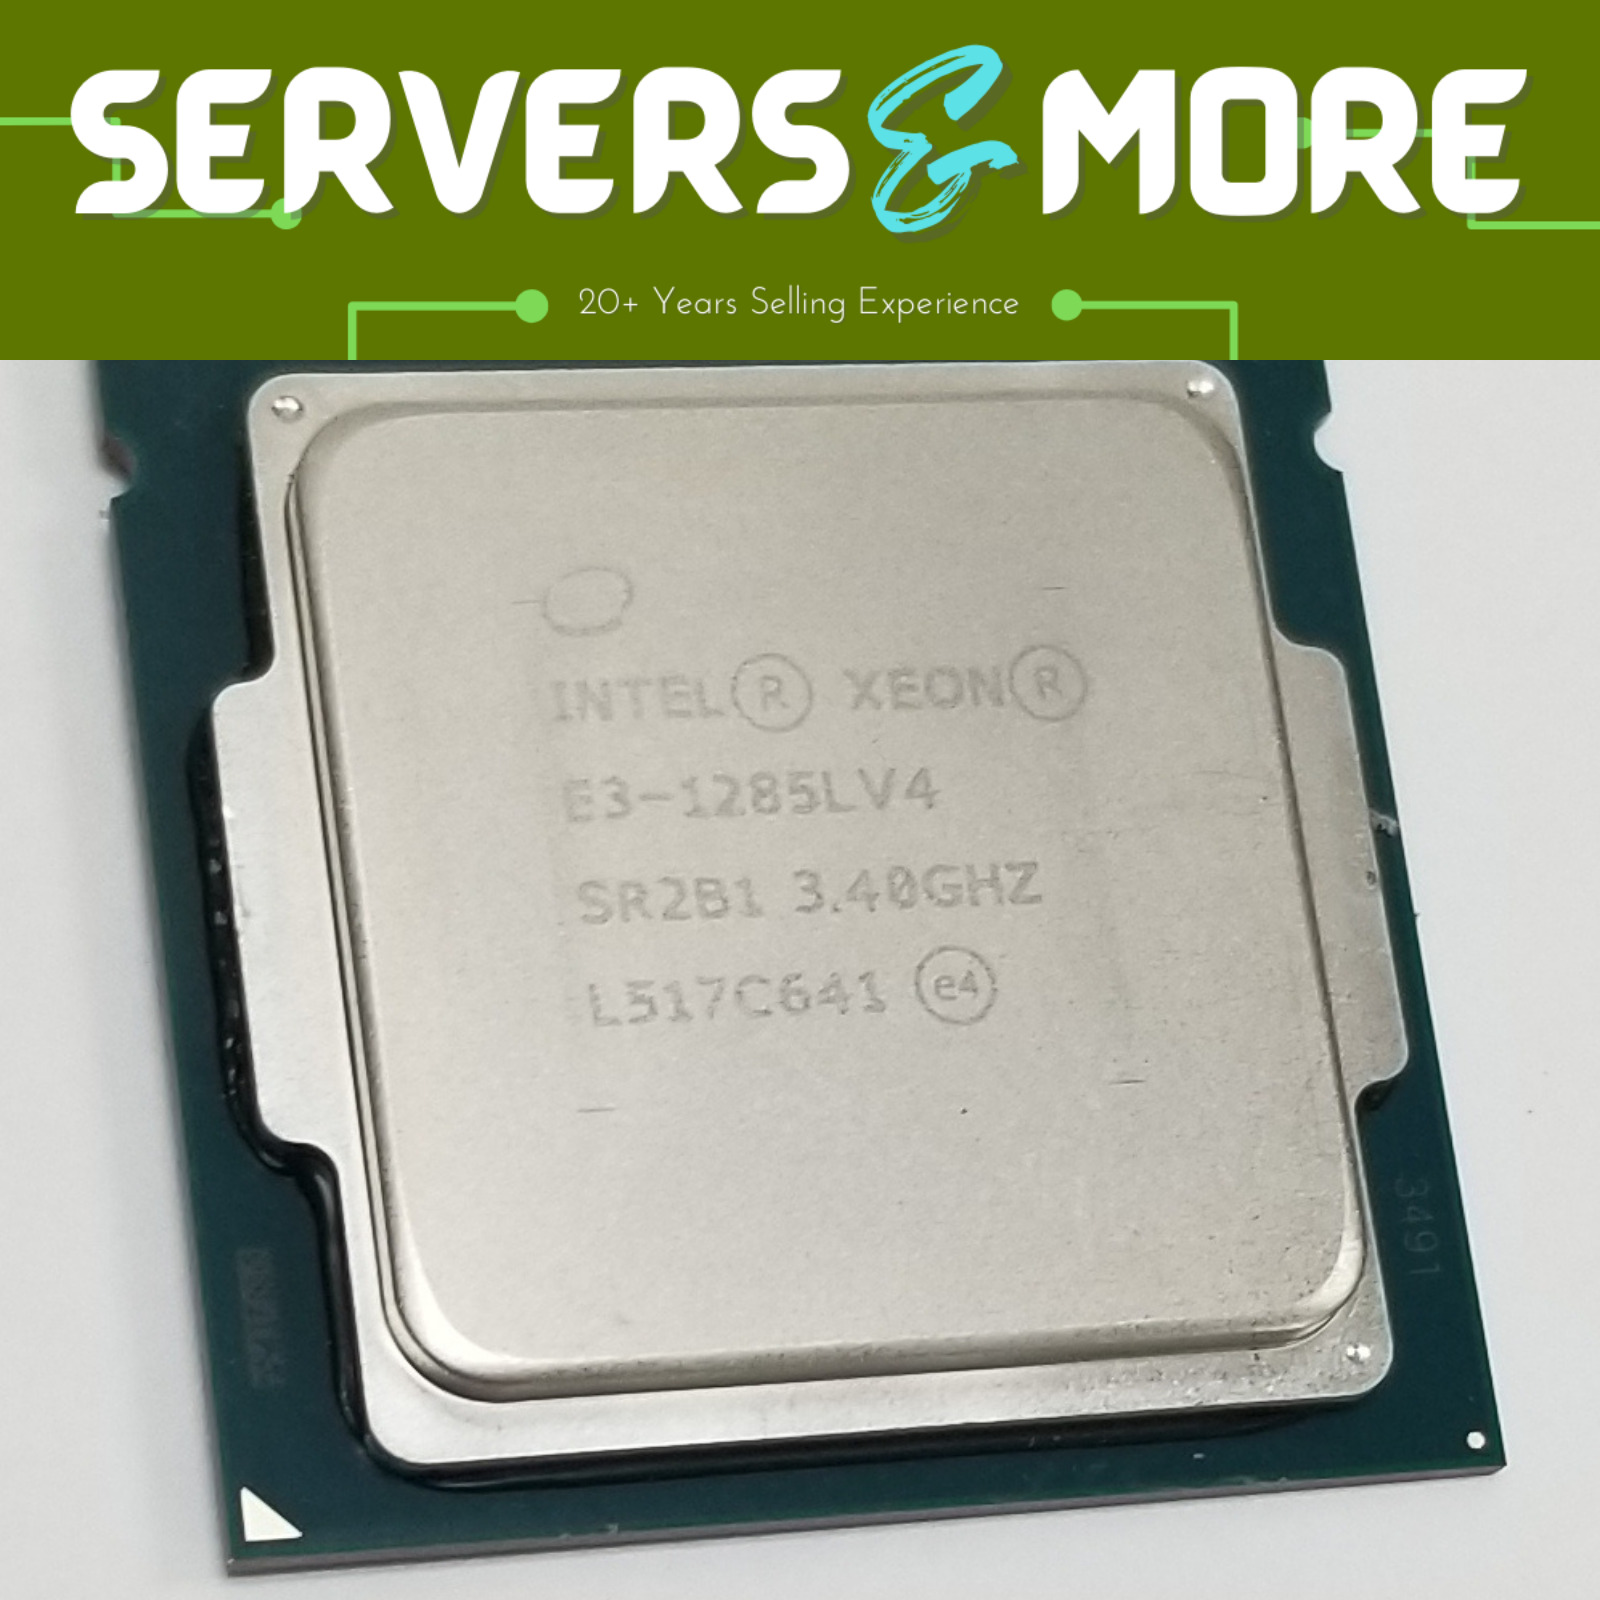 Intel Xeon E3-1285L v4 3.4GHz 4 Core SR2B1 LGA1150 CPU Processor 65W 1285L iGPU